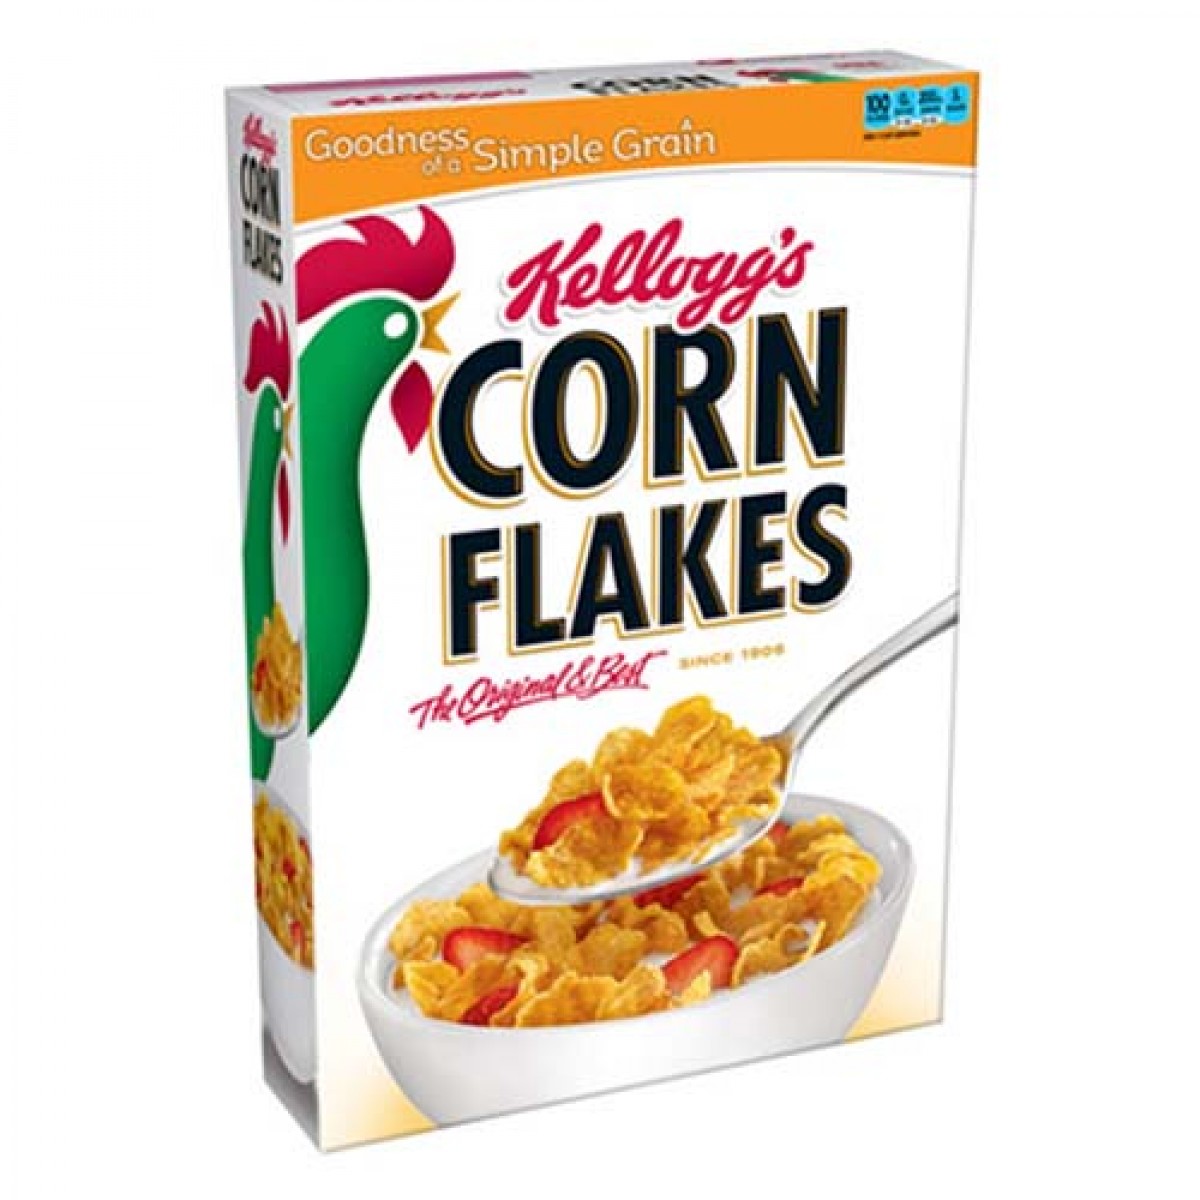 Some cereal. Cornflakes Kellogg's хлопья. Хлопья кукурузные Kellogg's. Хлопья кукурузные Corn Flakes. Хлопья Келлогс корнфлекс.